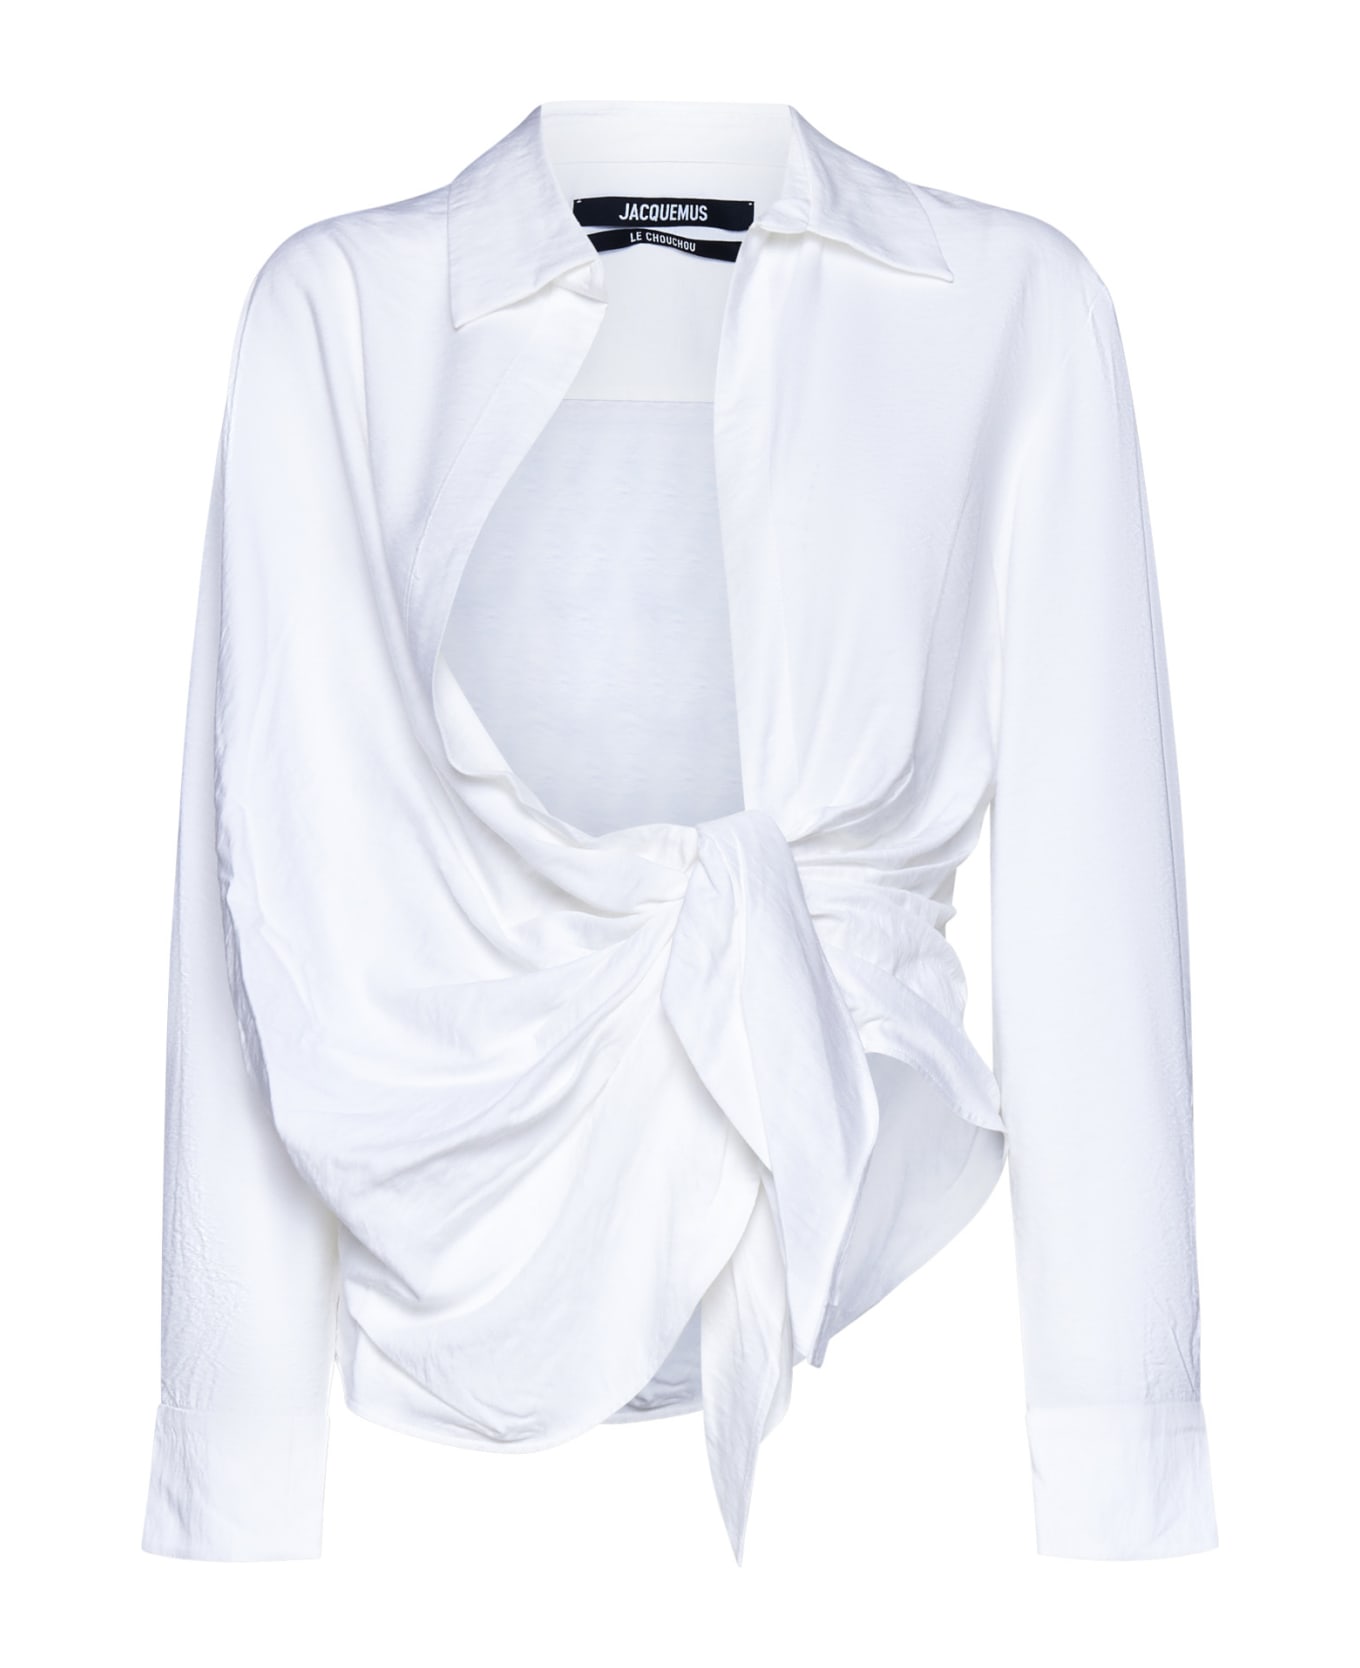 Jacquemus Shirt 'bahia' - White